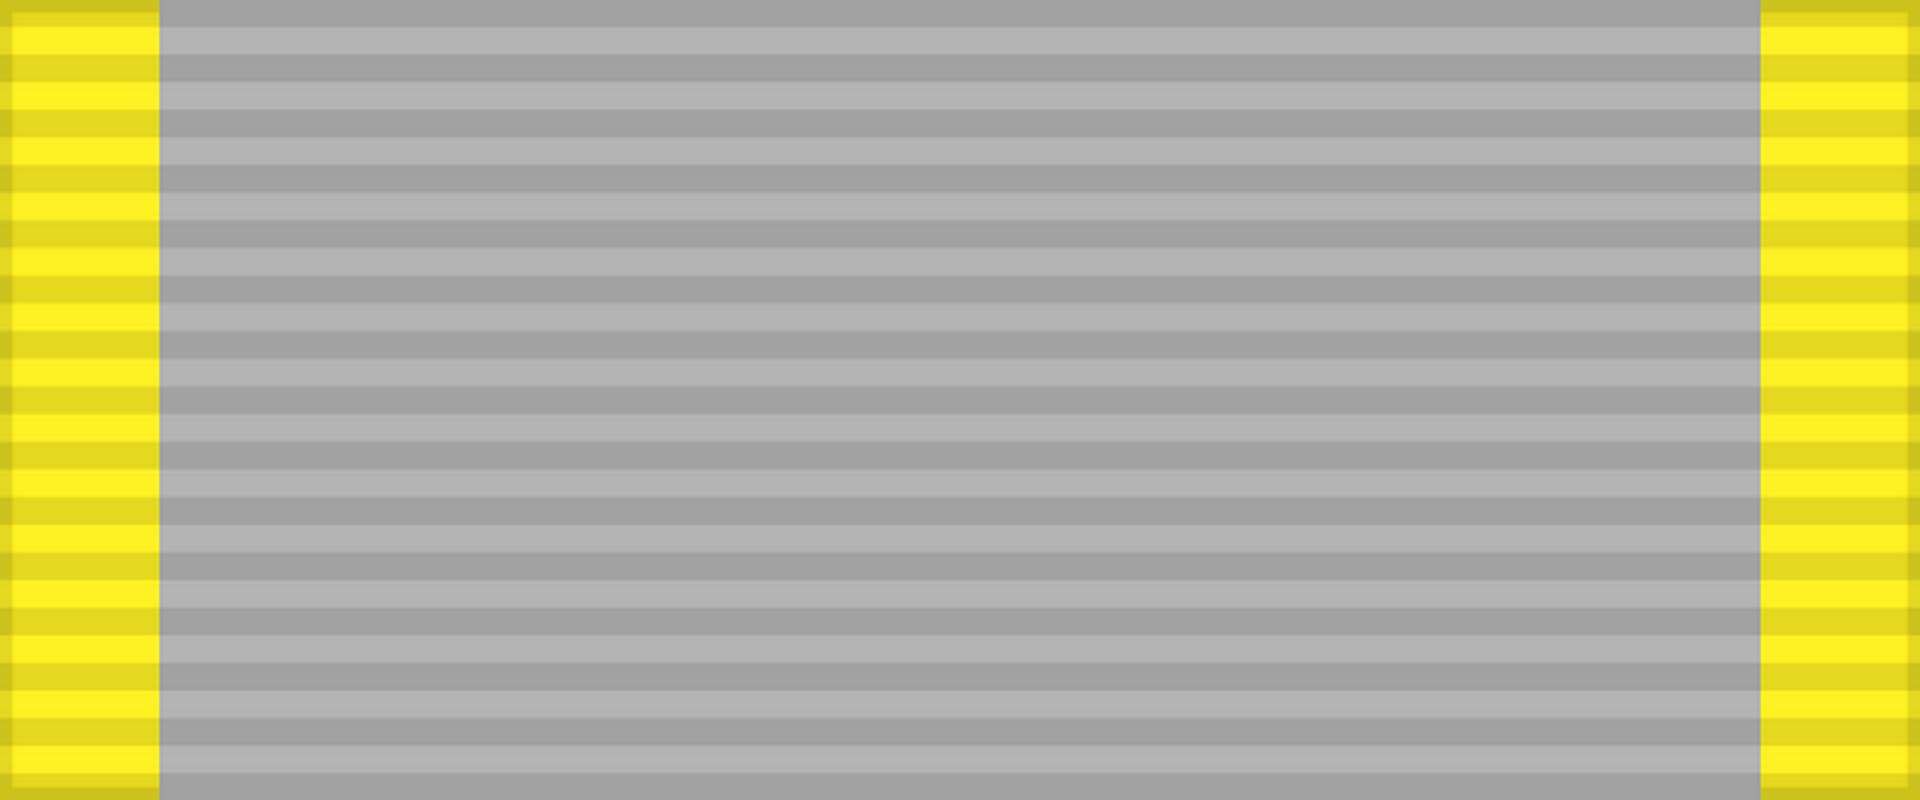 Лента медали «За боевые заслуги». СССР